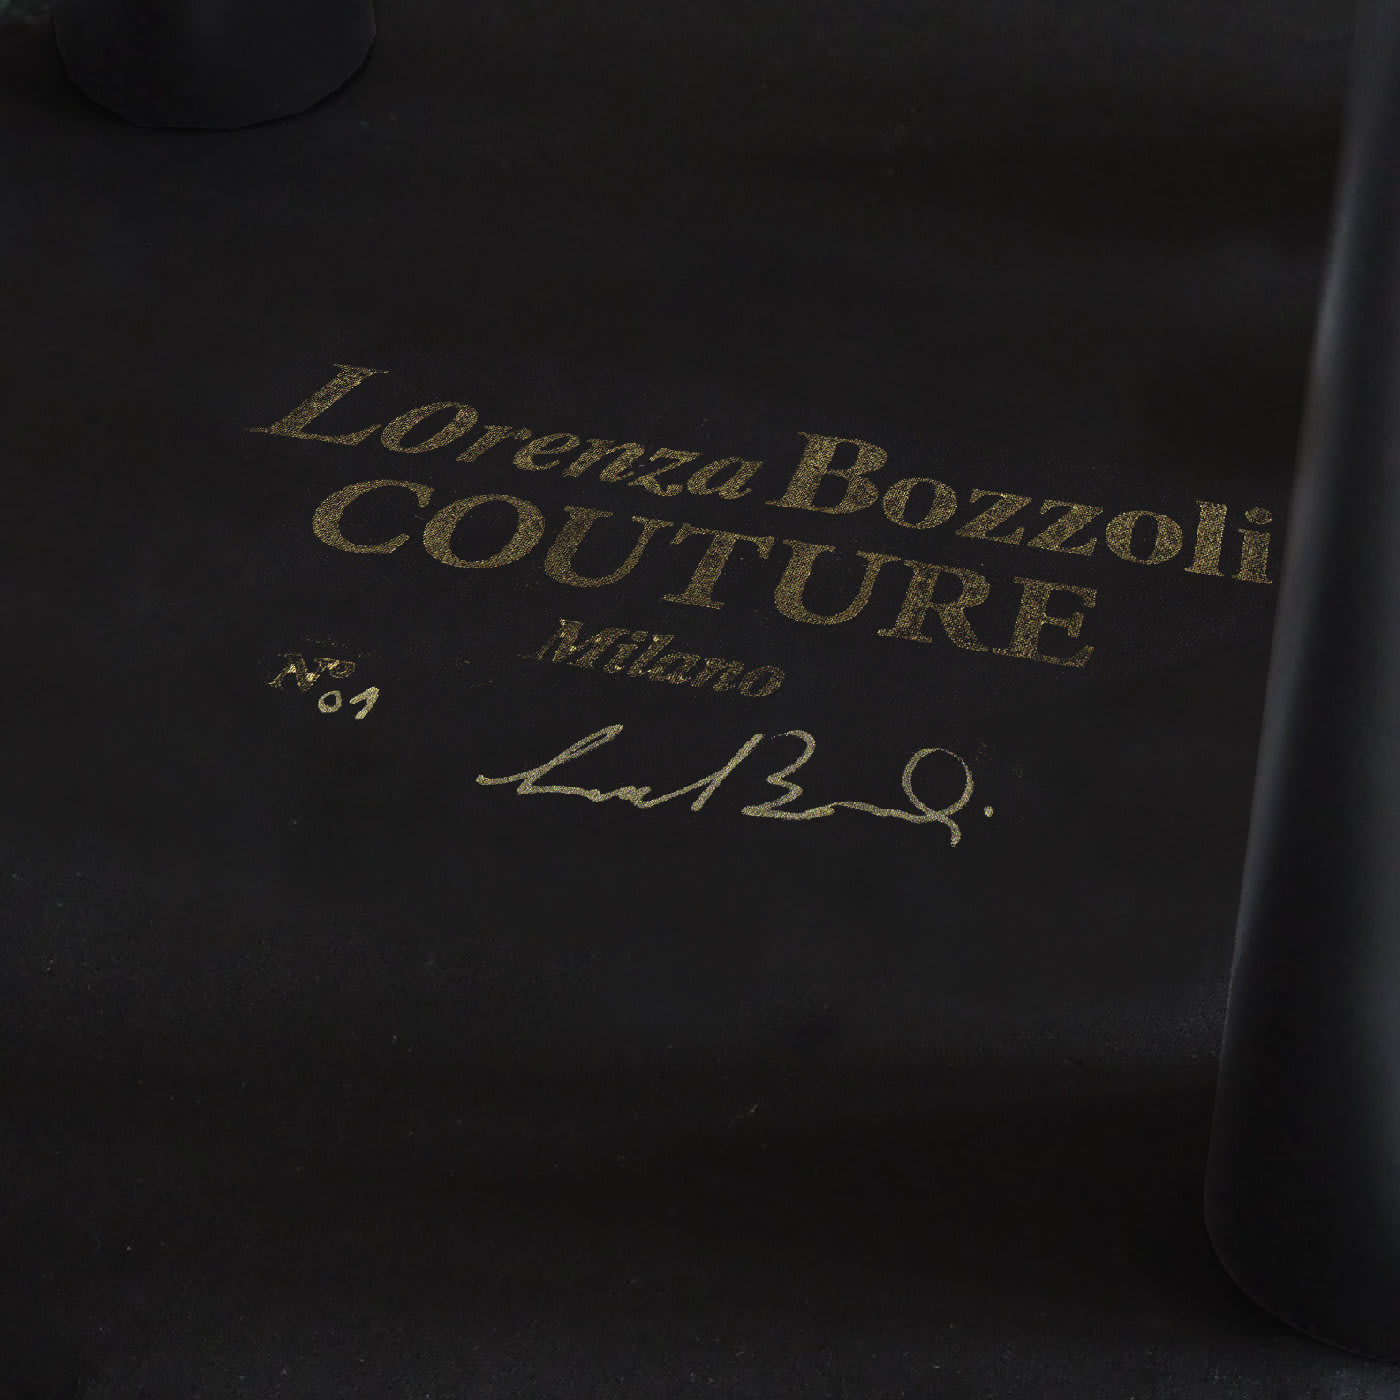 Couture Light Blue Pouf with Geometric Fringe - Lorenza Bozzoli Design